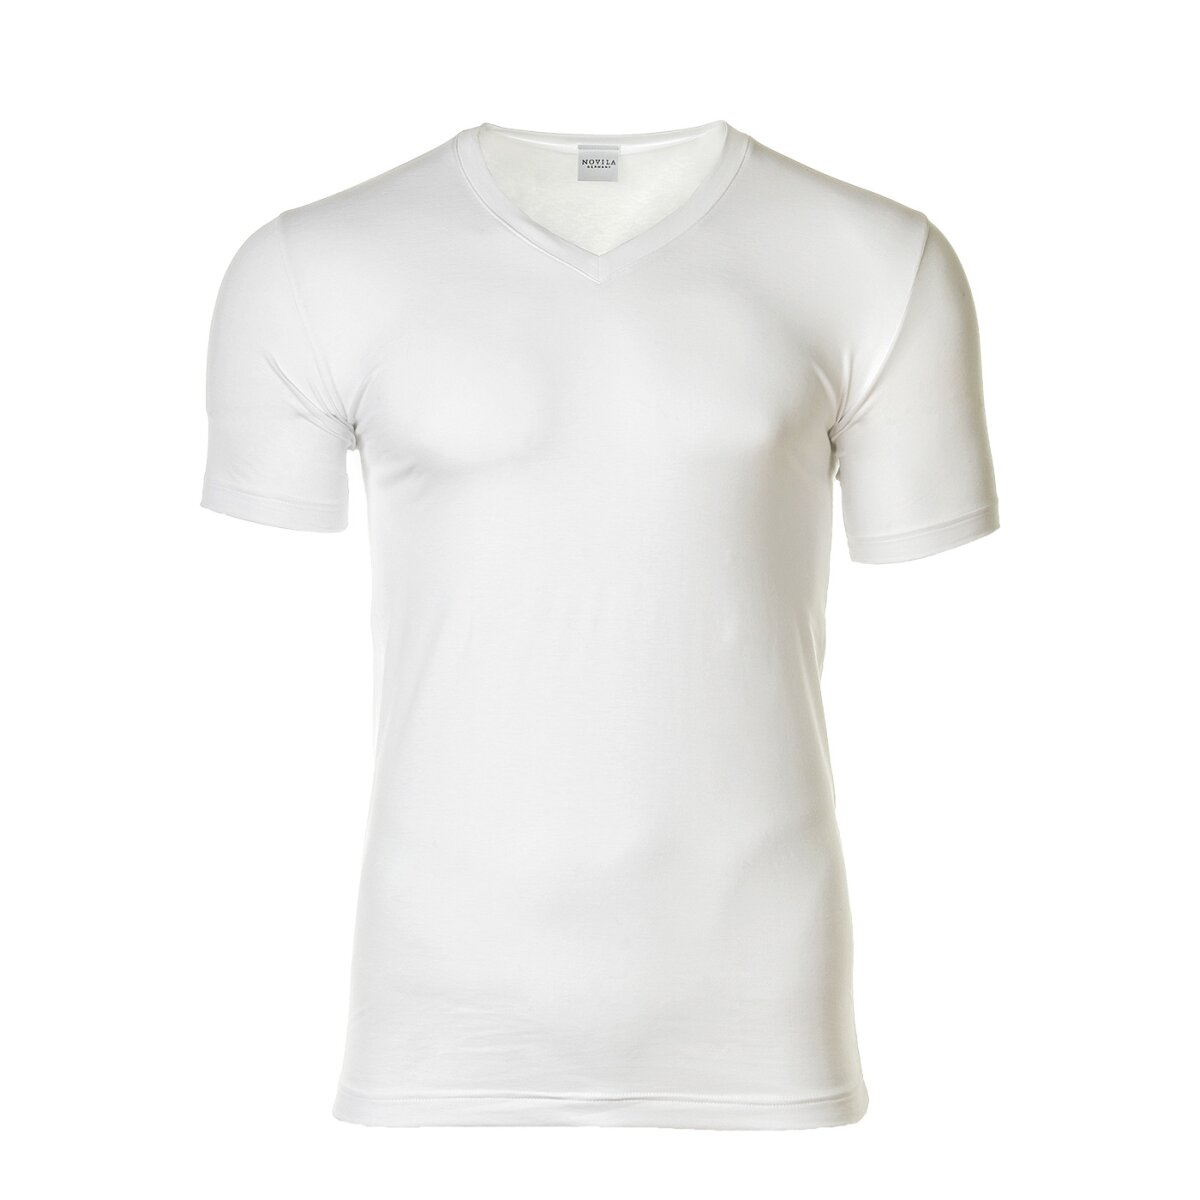 NOVILA Herren T-Shirt aus elastischem Fein-Single-Jersey, 49,95 €